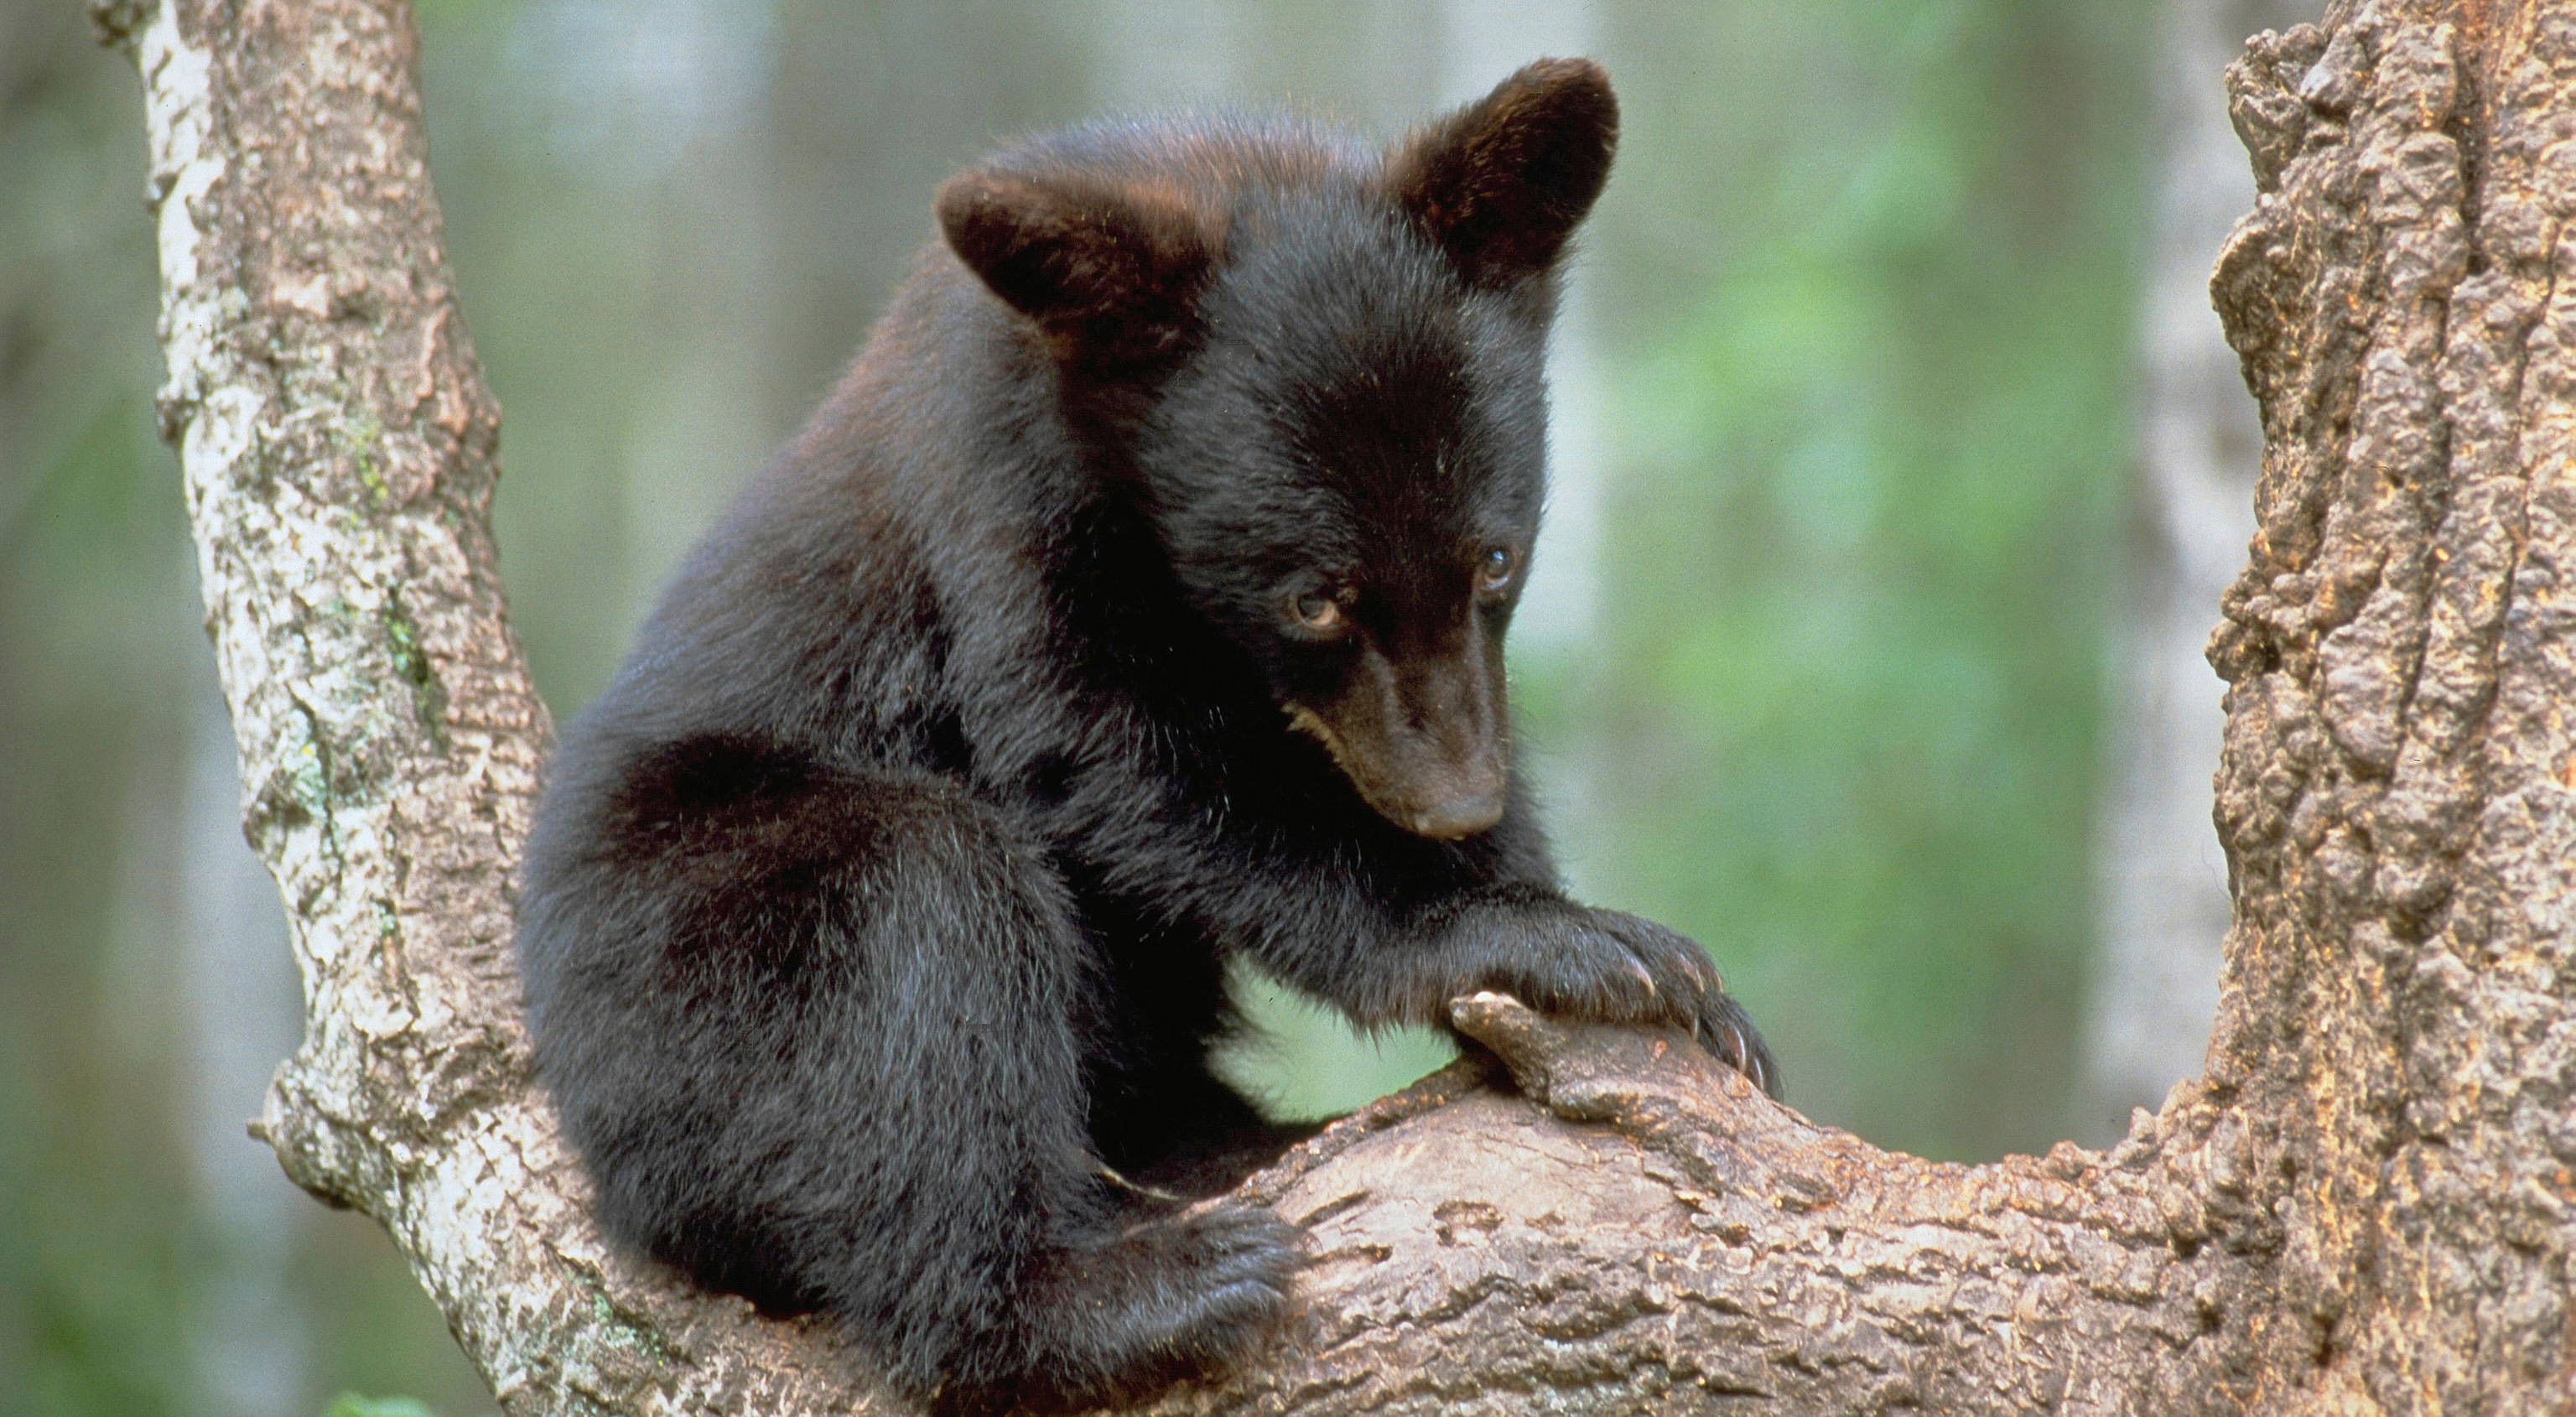 A black bear cub sits on a log.